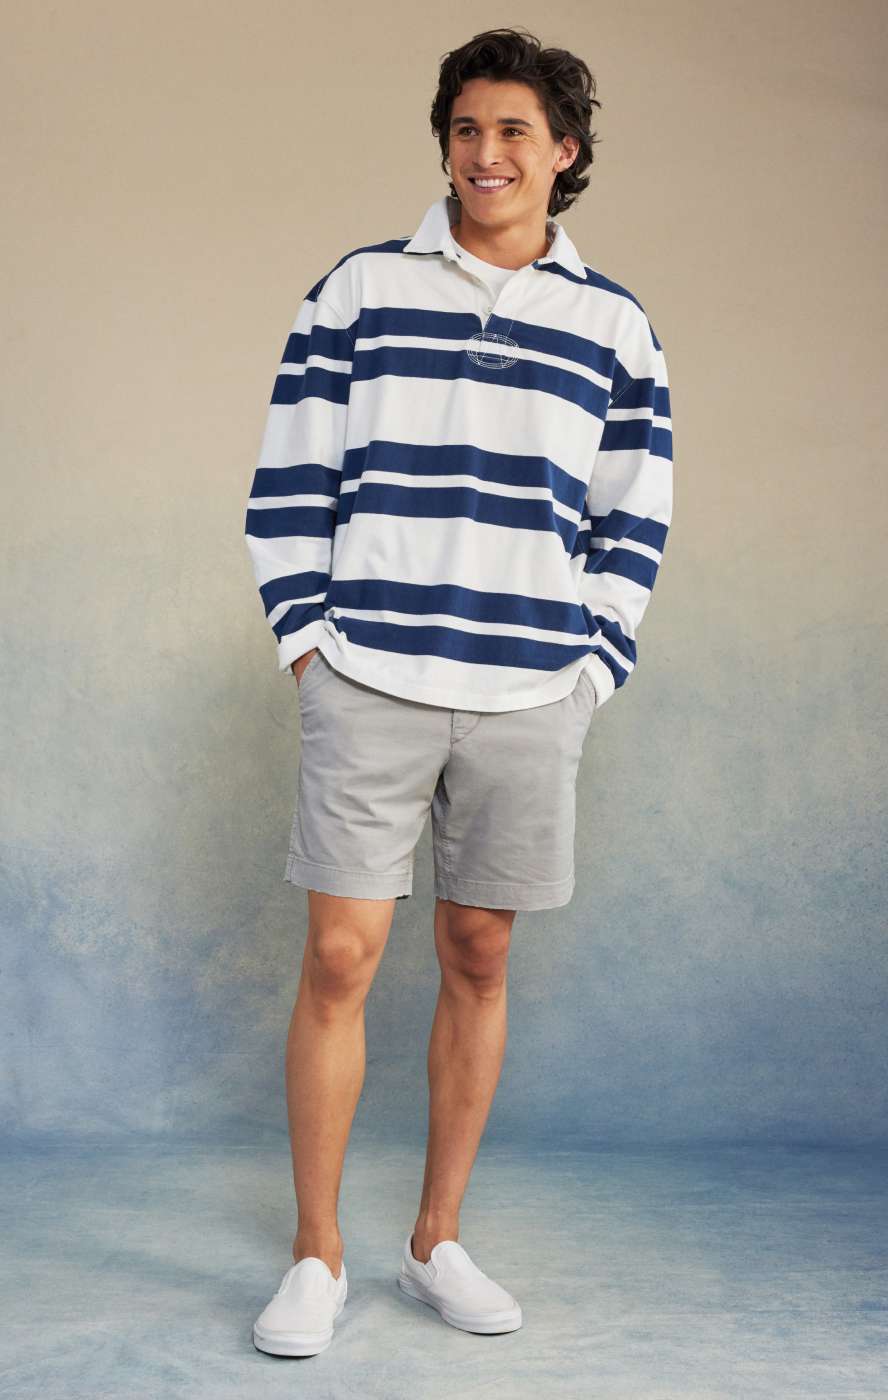 model wearing grey colored khaki shorts and striped long sleeve shirt